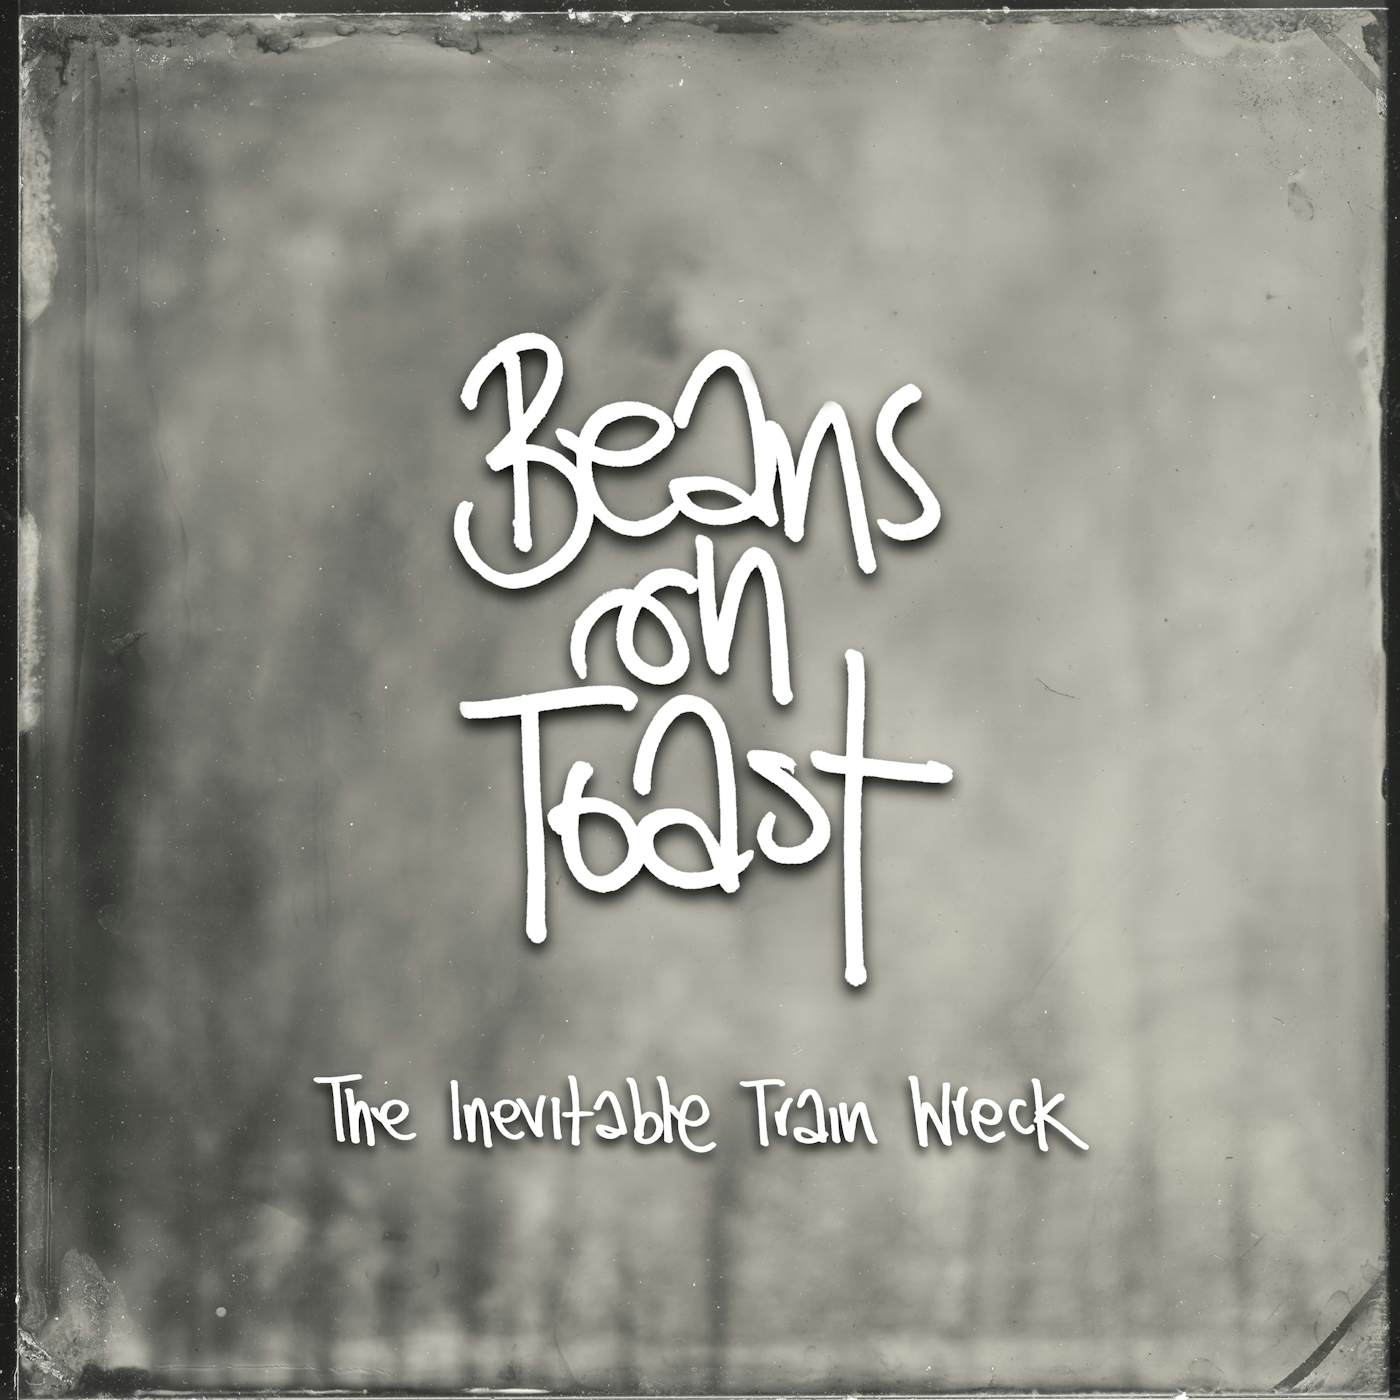 Beans On Toast 'The Inevitable Train Wreck' Vinyl Record